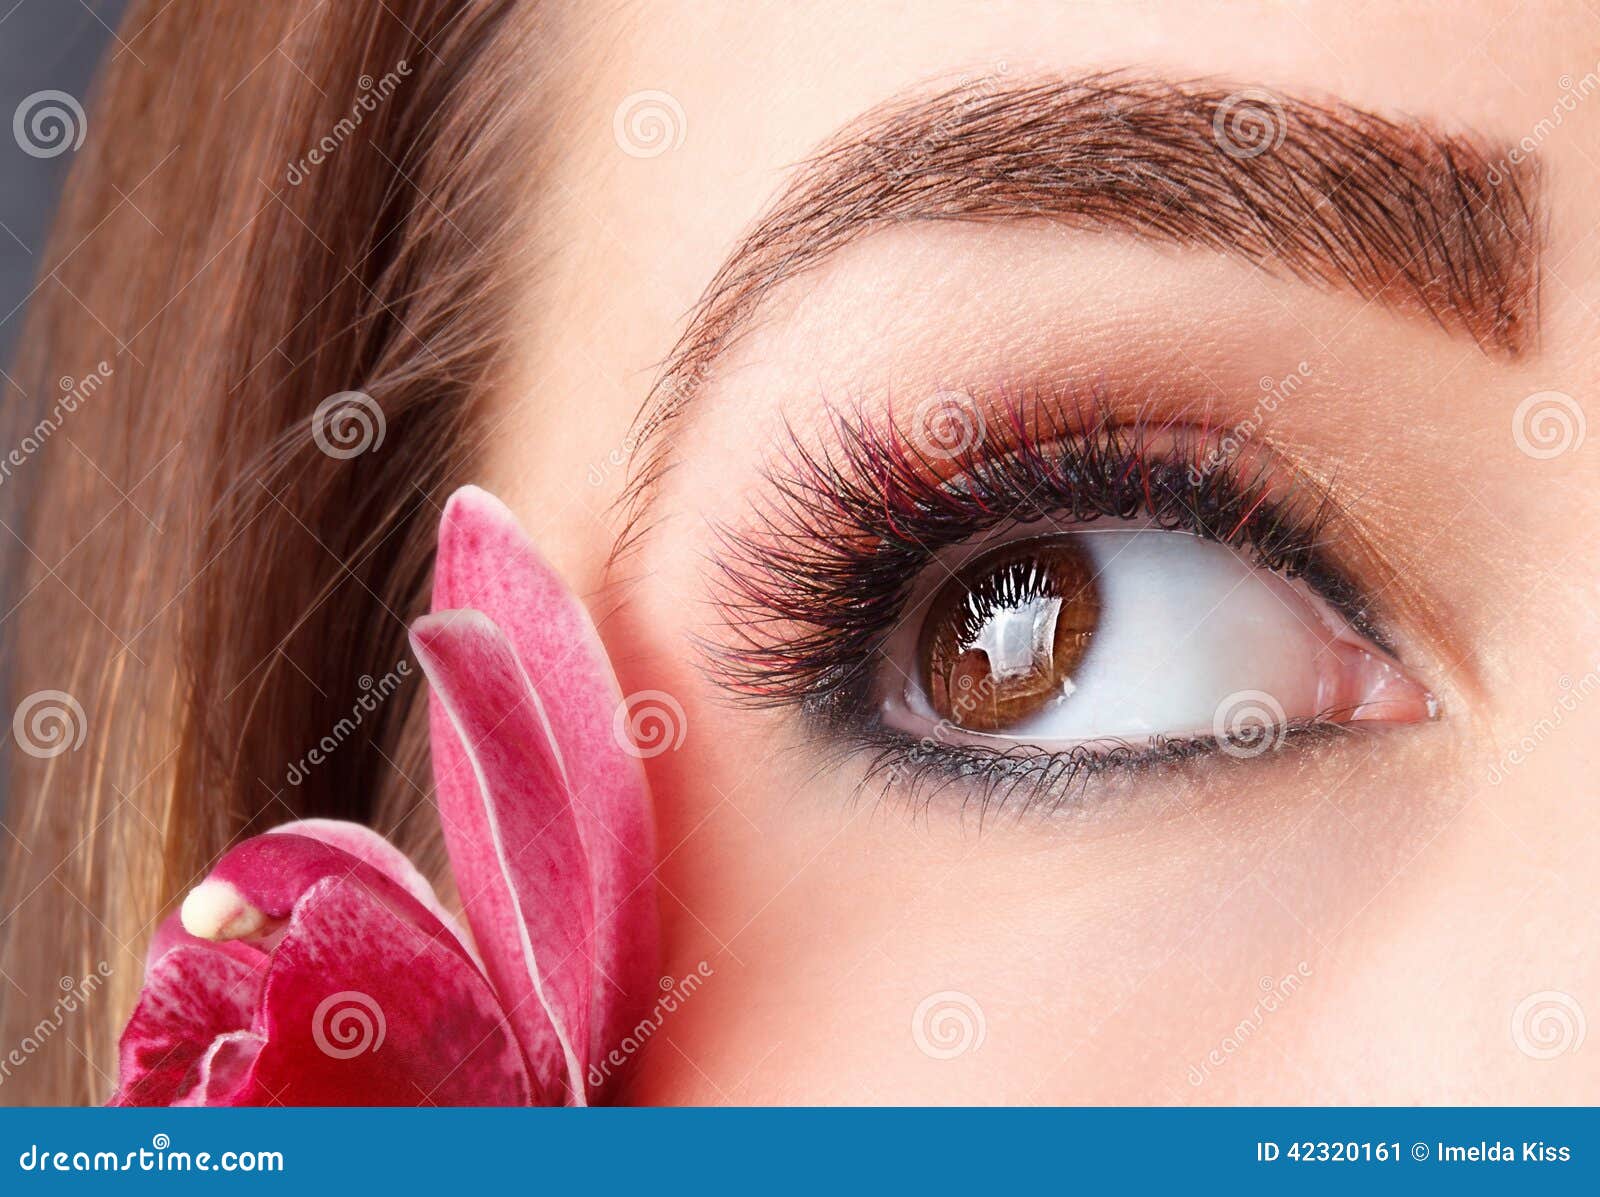 portrait of colorful eyelash extensions